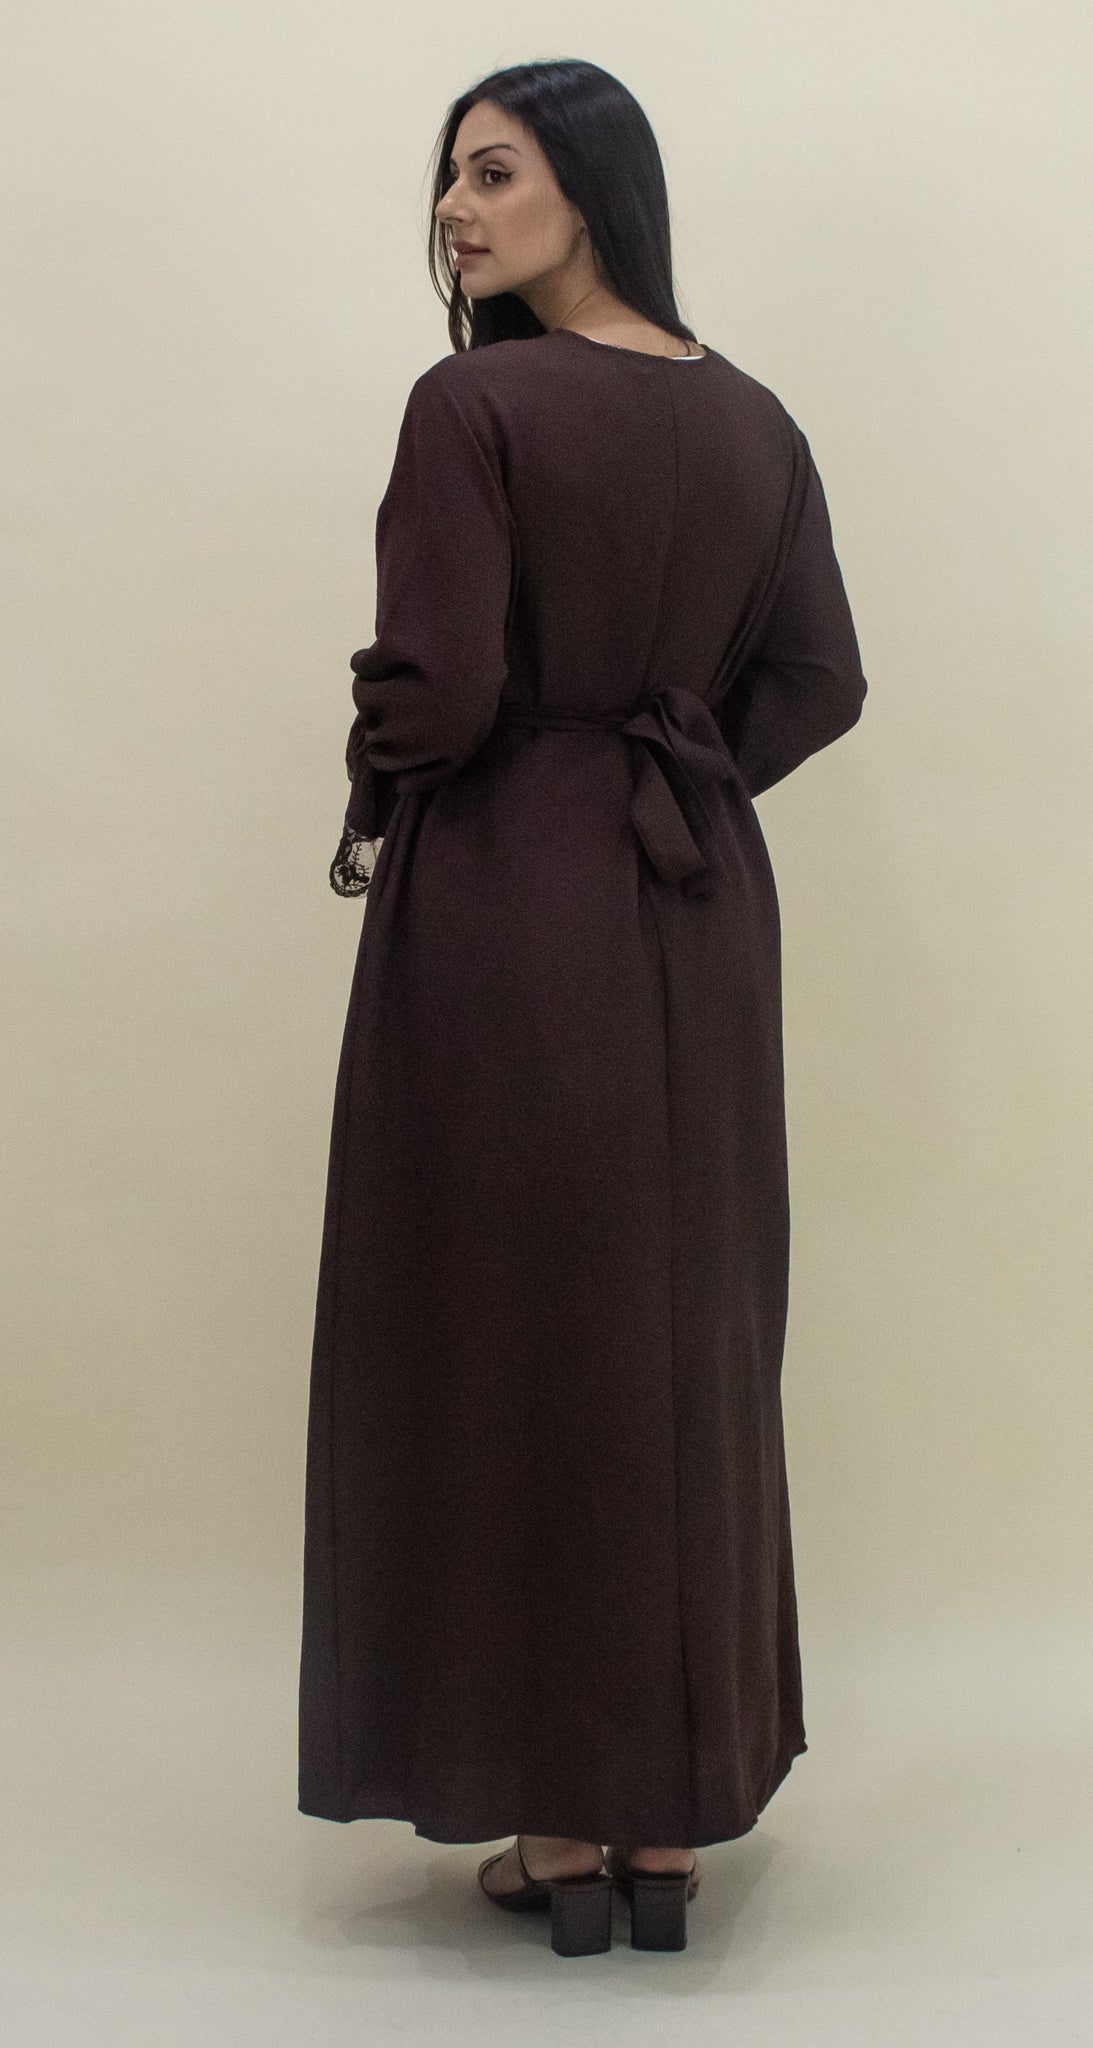 Lace Abaya - Chocolate Brown